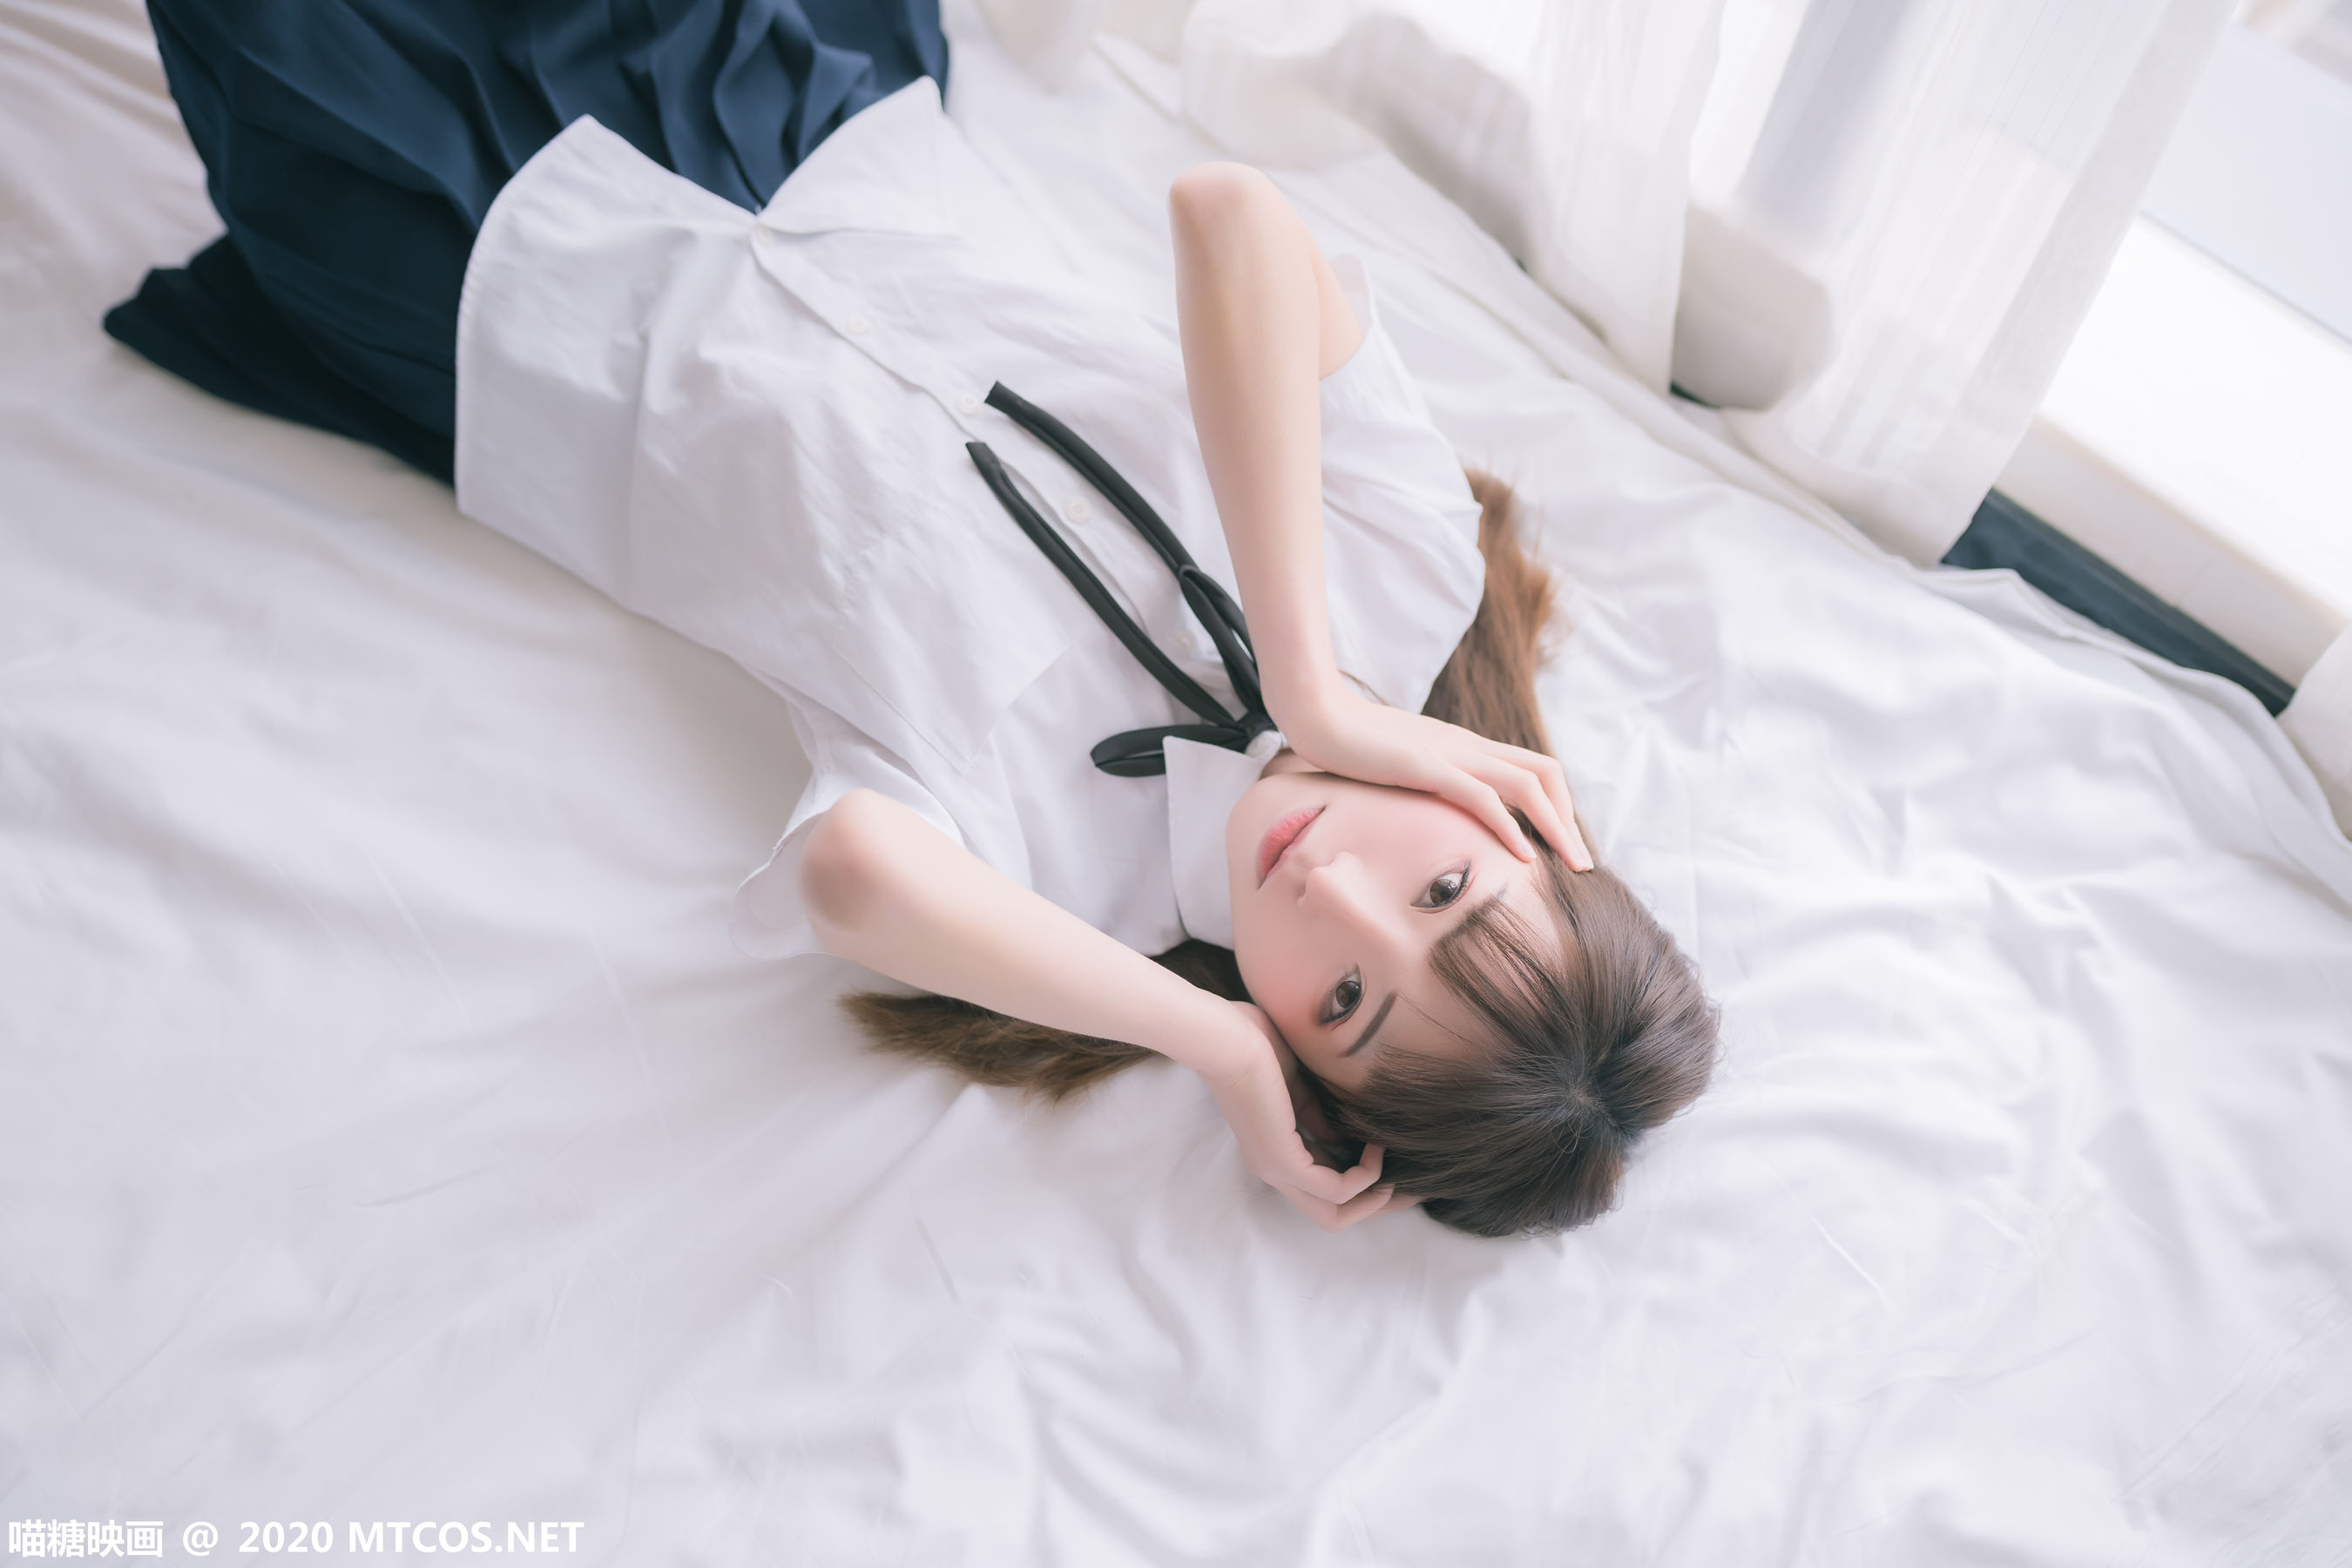 [糖] JKL.012 “Summer Uniform JK Uniform” Photo Album